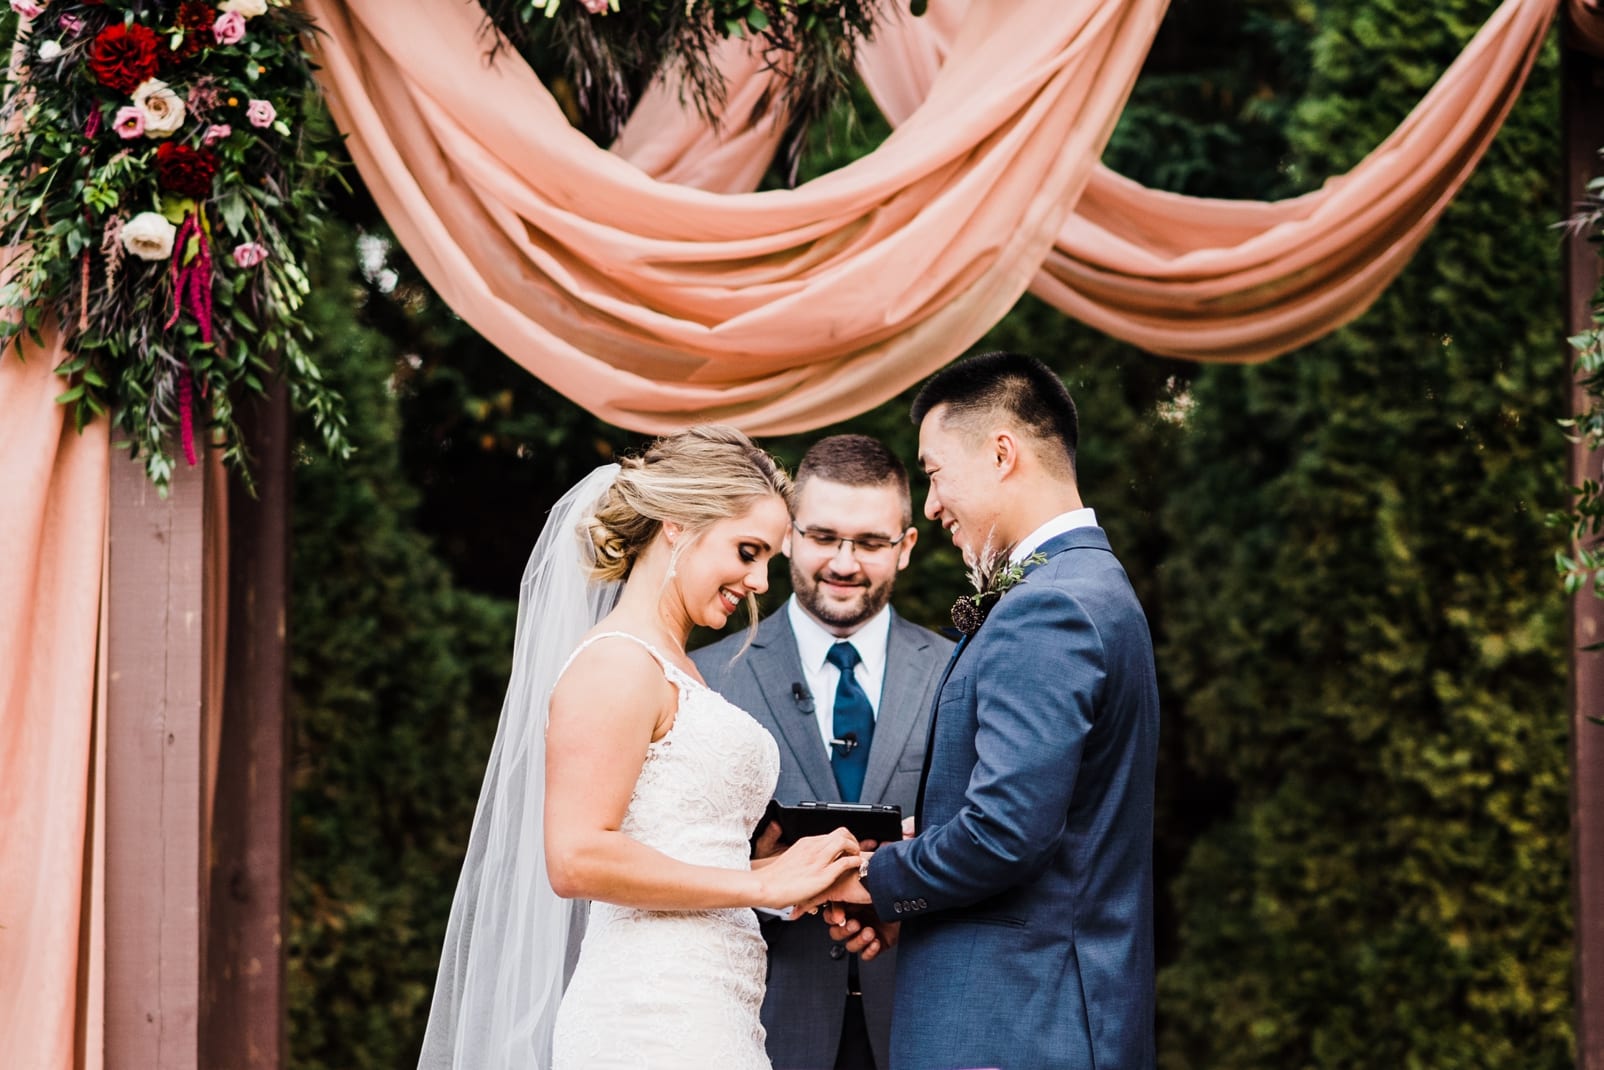 sutherland estate and gardens wedding photographer garden wedding ceremony mauve wedding colors ceremony with fabric draping photo